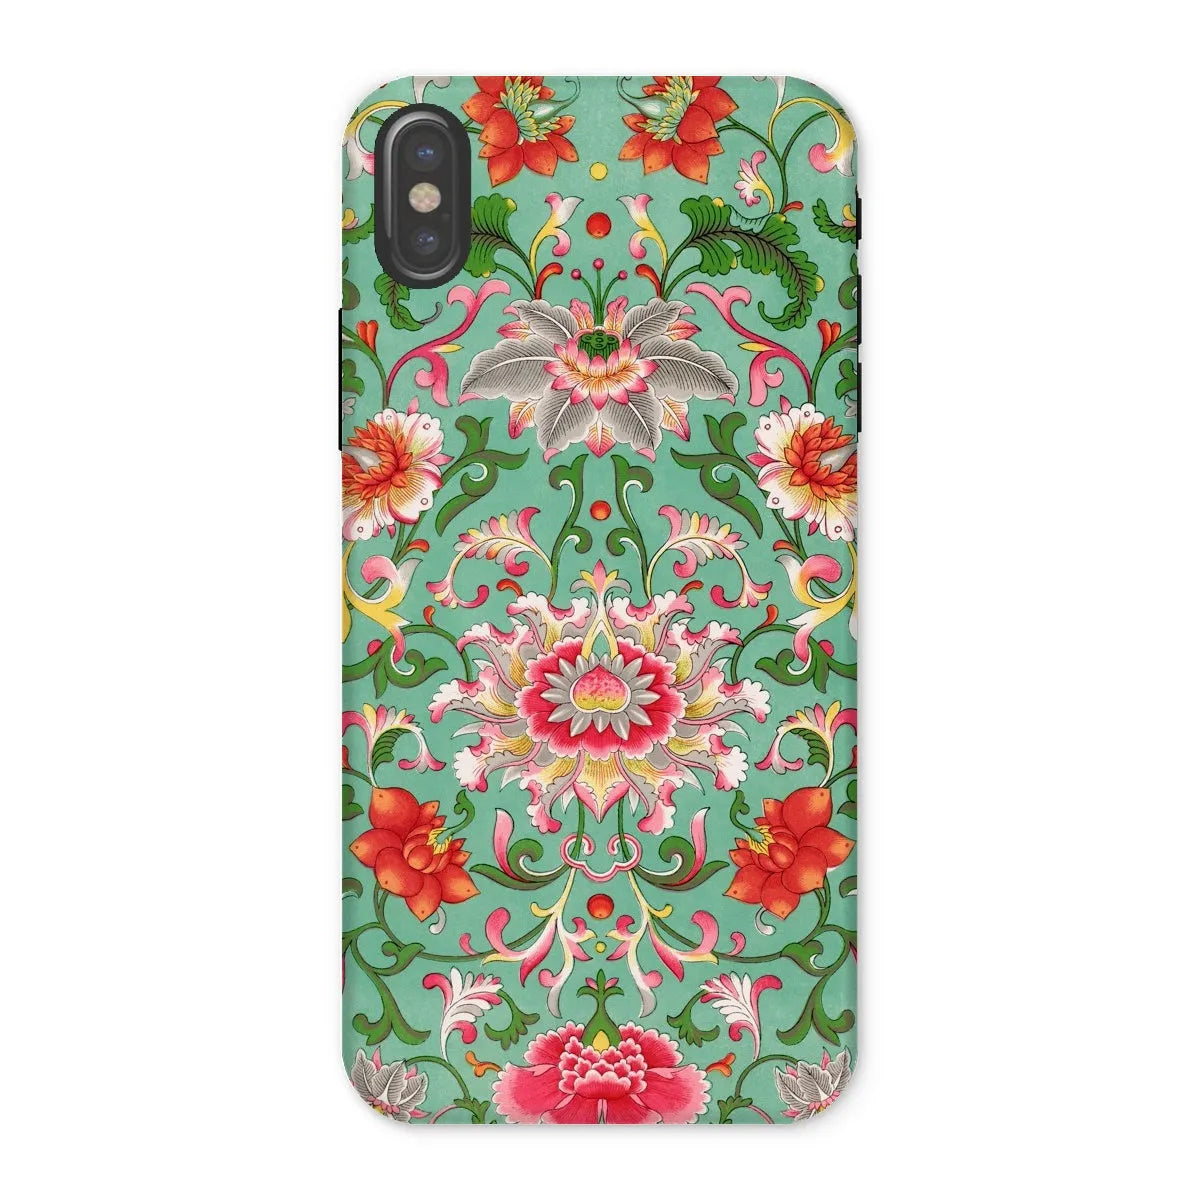 Chinese Floral Aesthetic Art Phone Case - Owen Jones - Iphone x / Matte - Mobile Phone Cases - Aesthetic Art